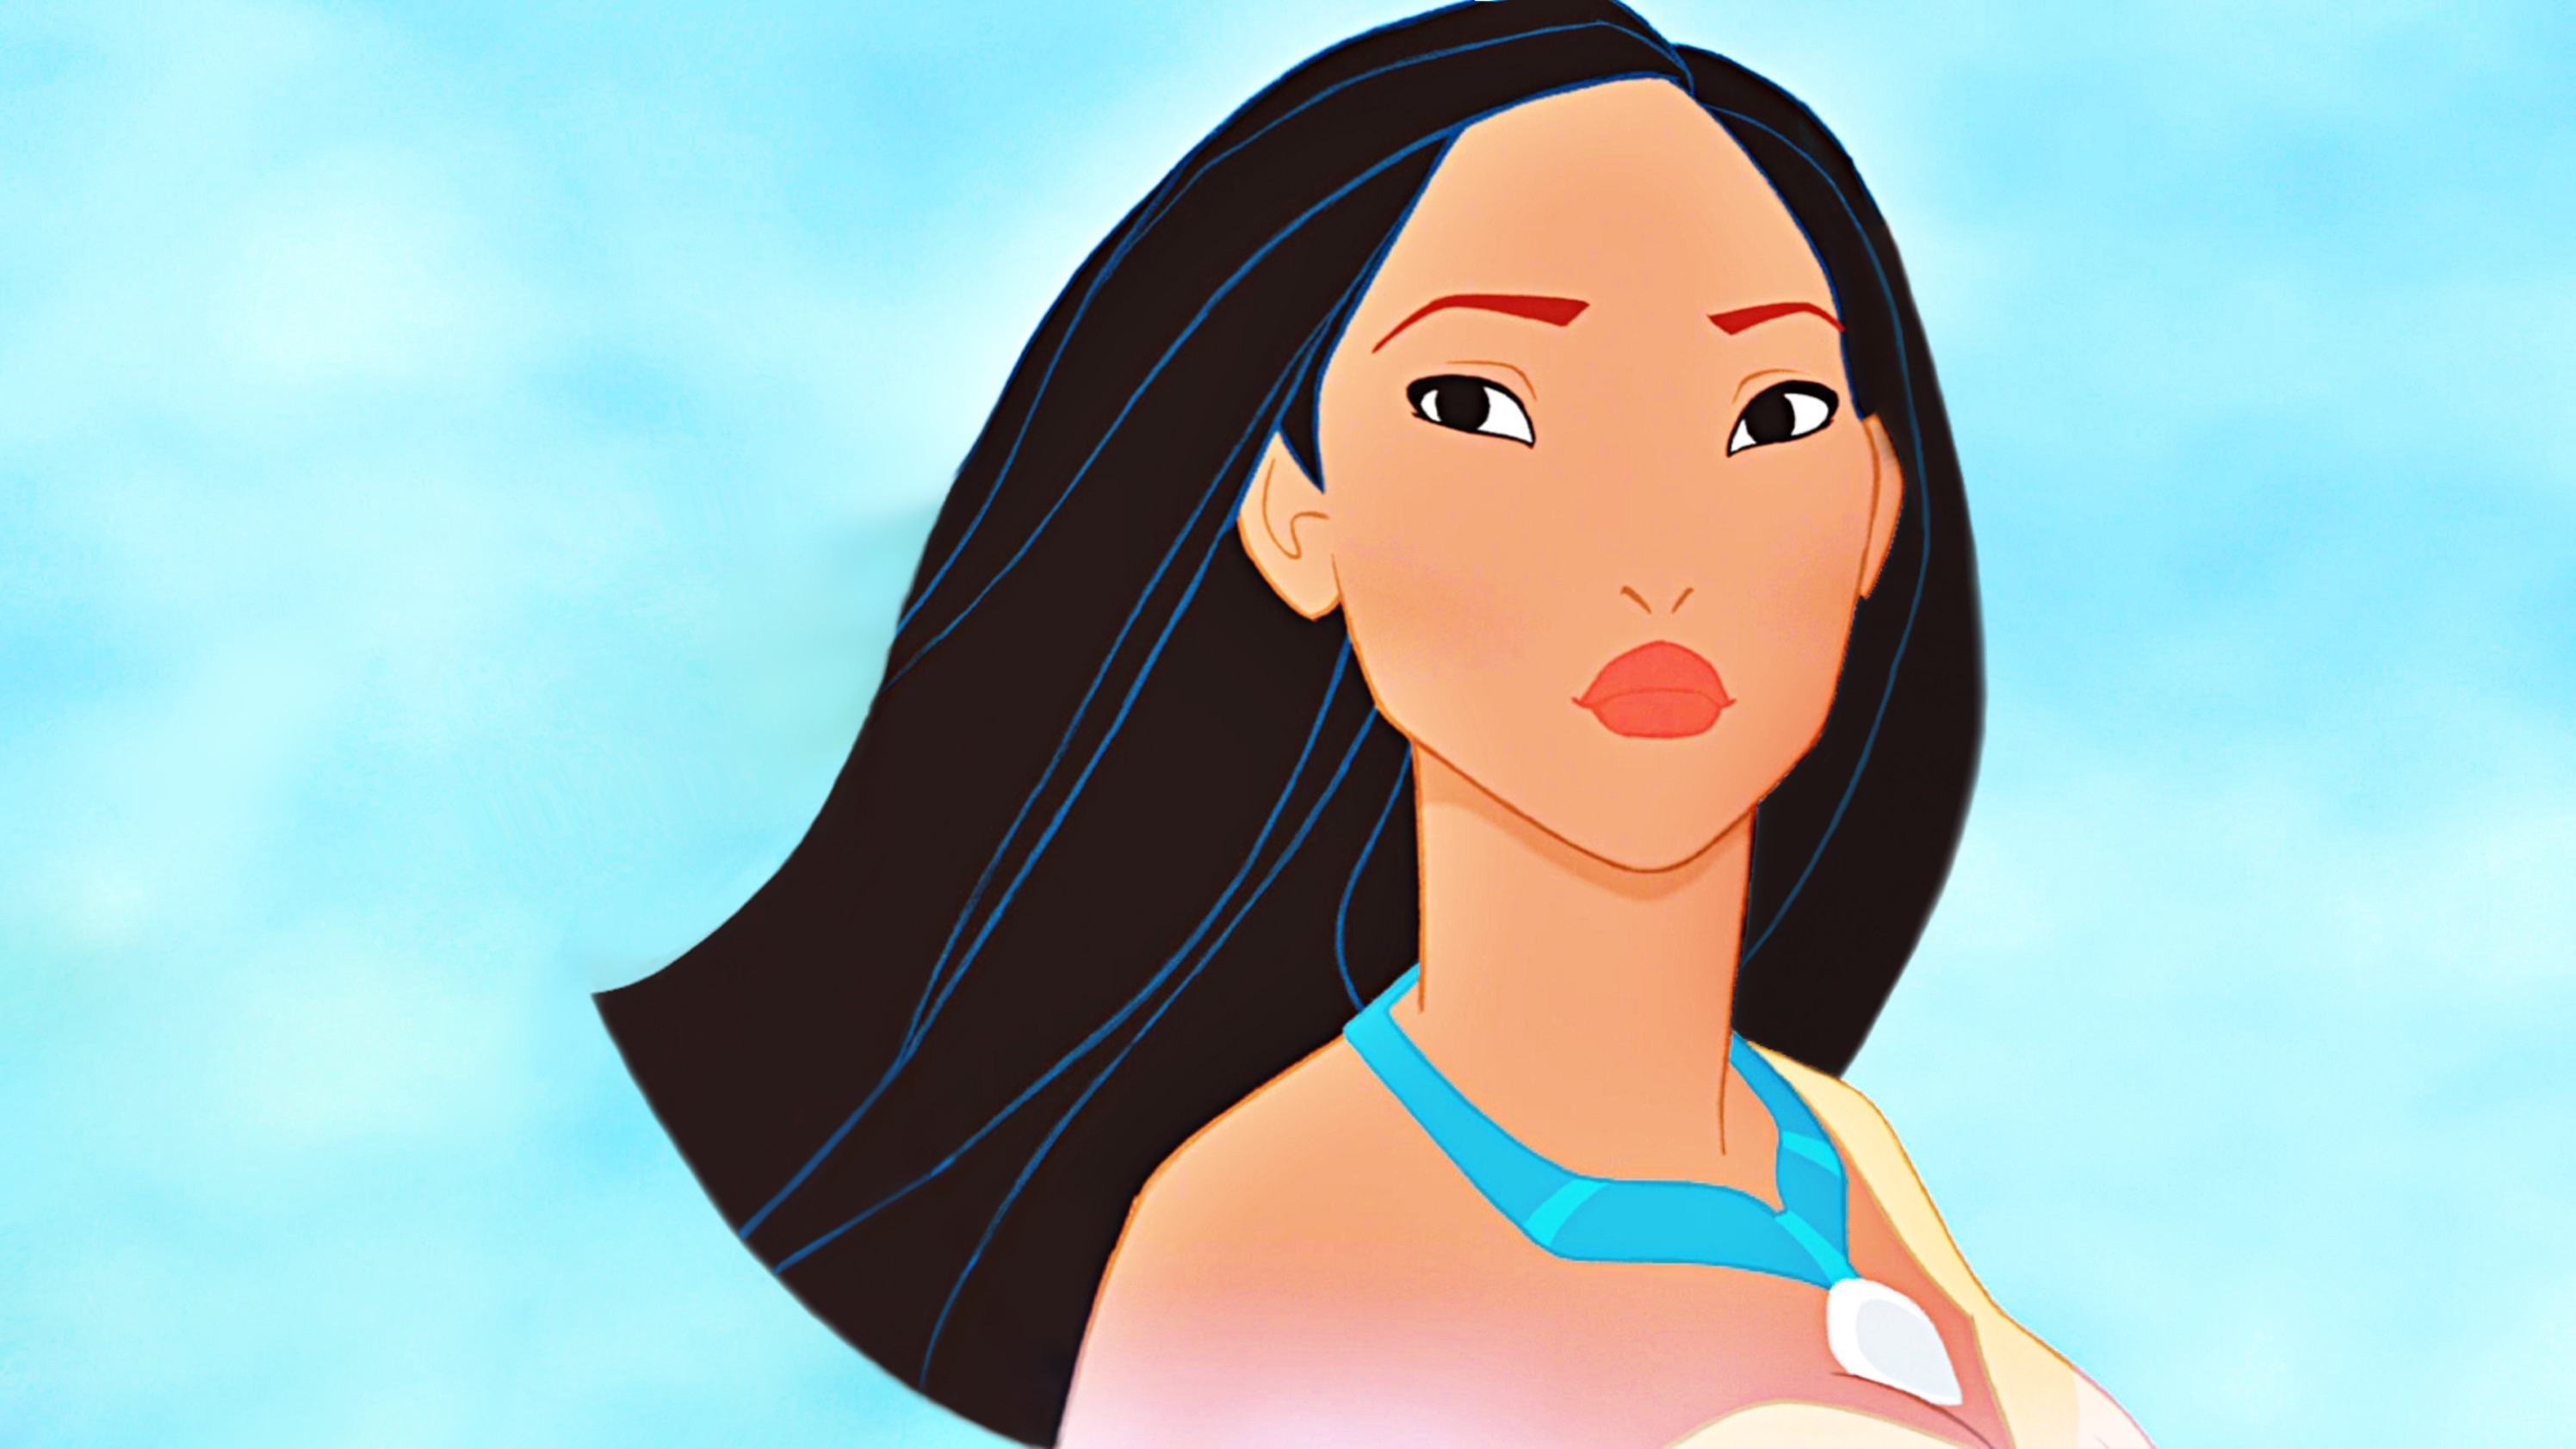 2992x1683 Walt Disney Images Pocahontas with Short Hair Disney Princess Fan Art (38781027) Fanpop